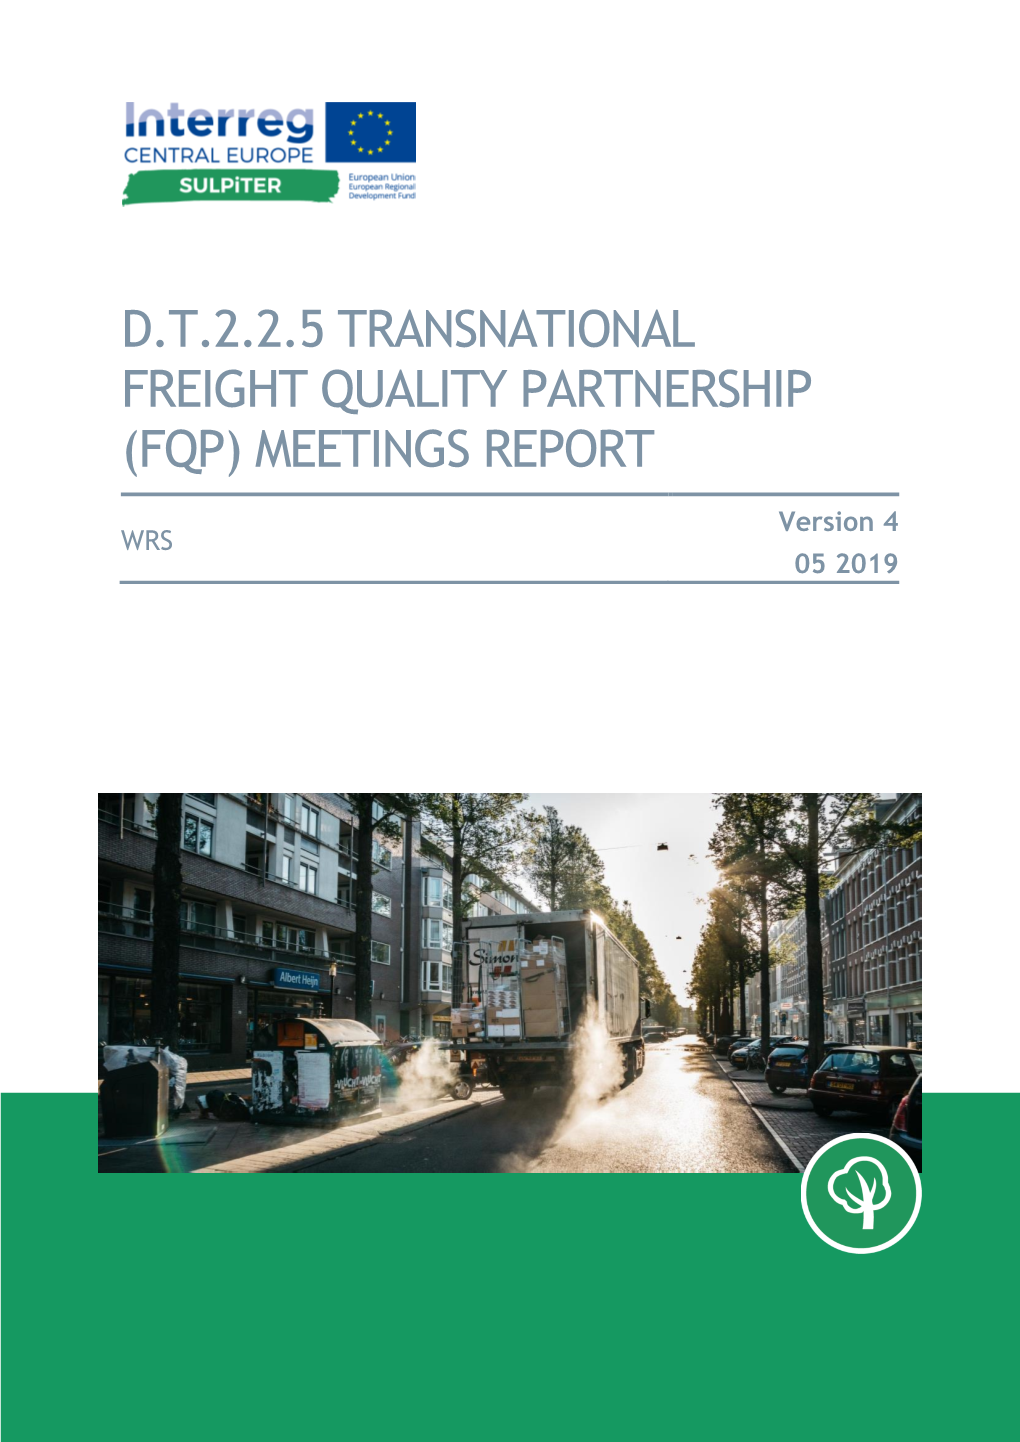 Transnational Freight Quality Partnership (FQP)